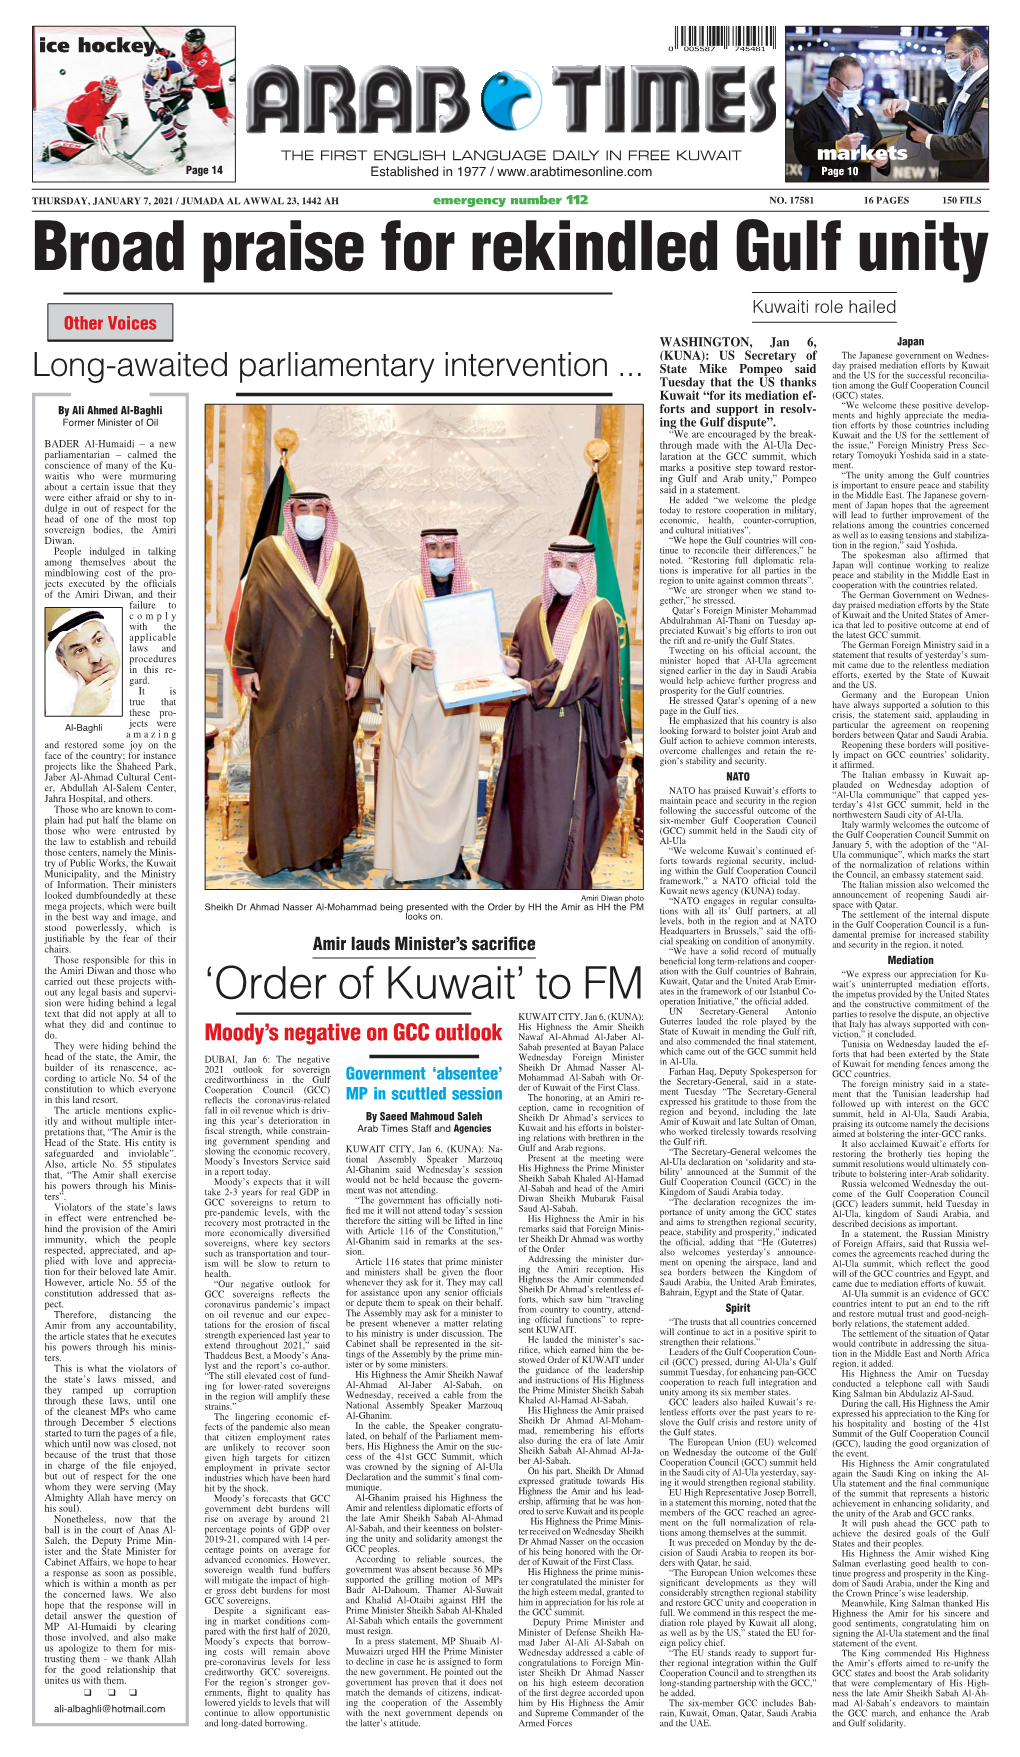 Broad Praise for Rekindled Gulf Unity